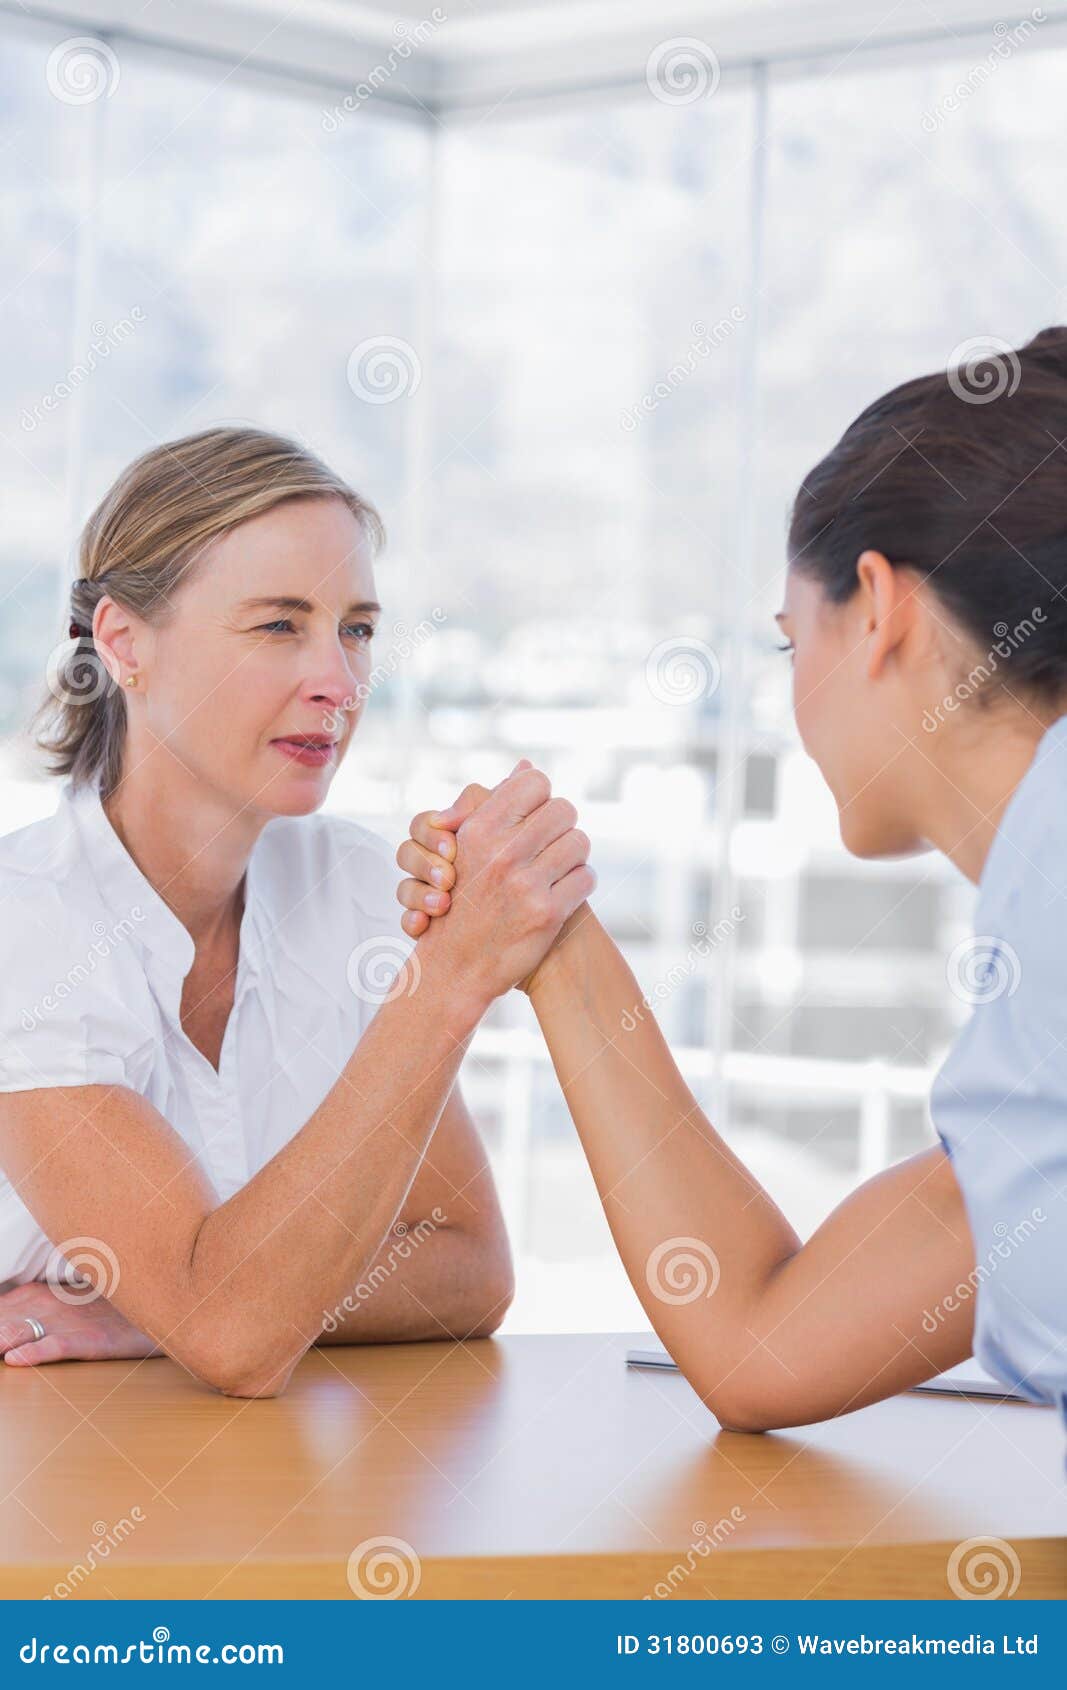 rival businesswomen having an arm wrestle